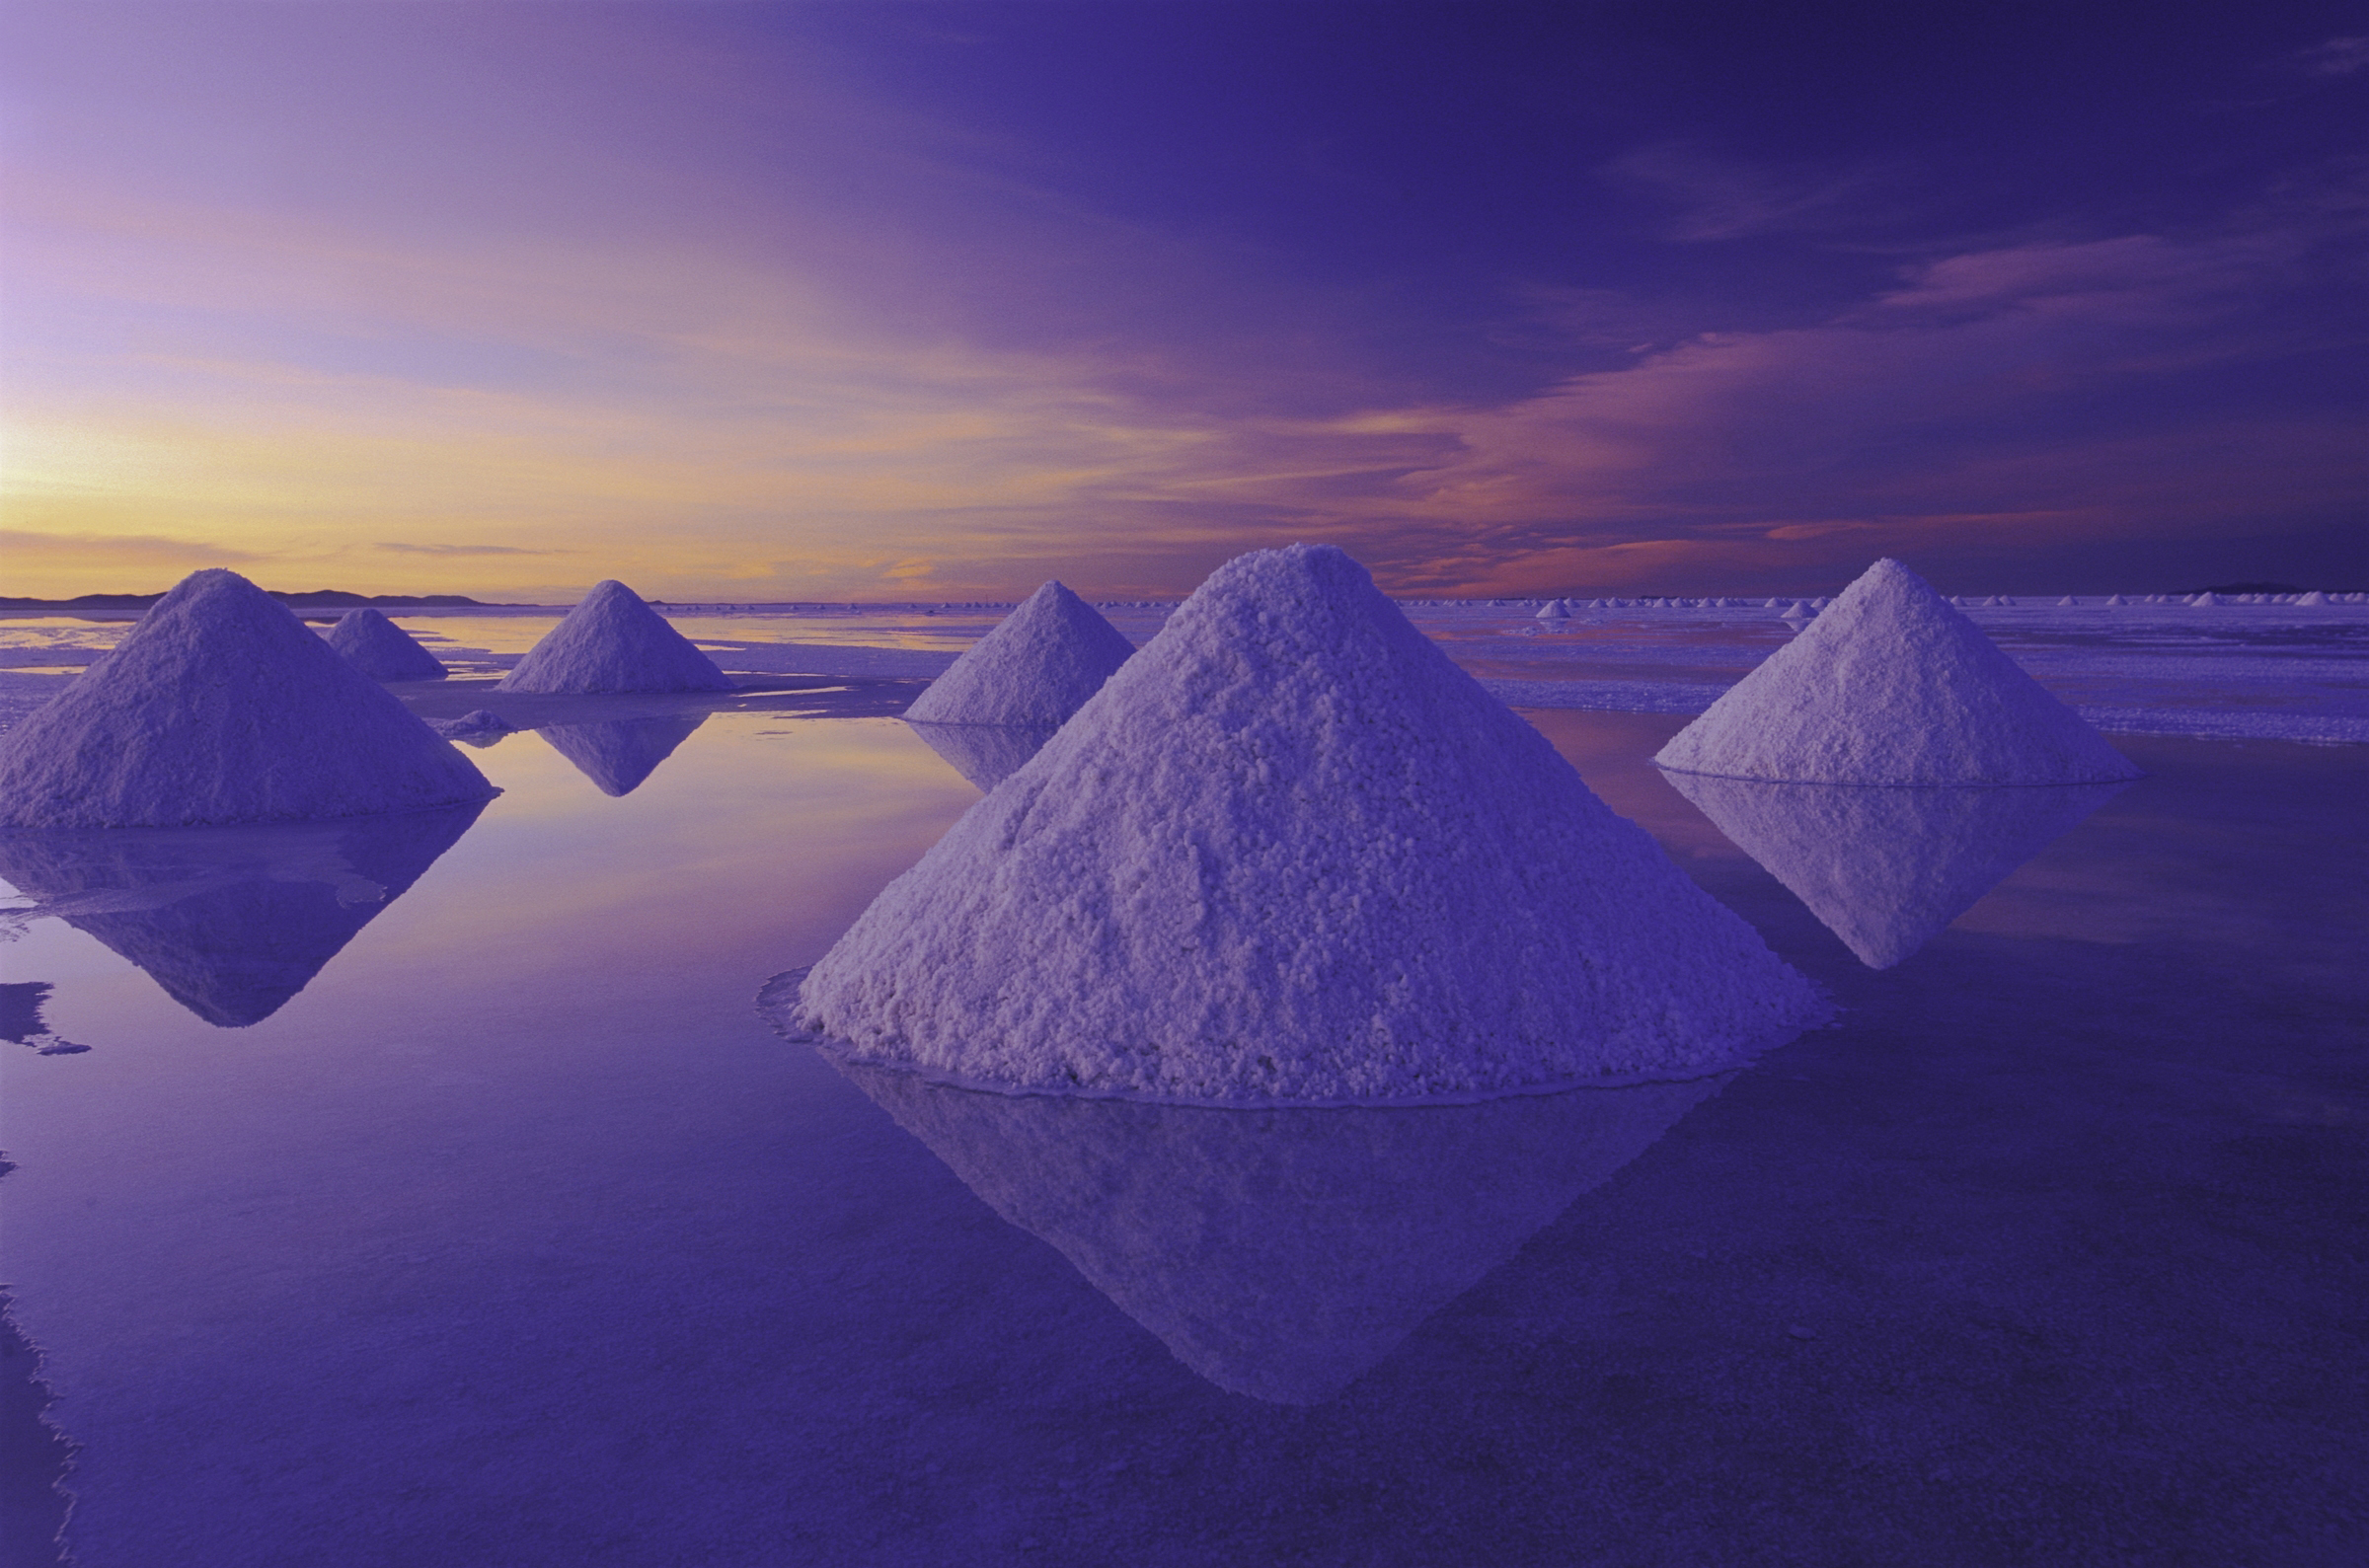 Pyramids of salt reflect the pink hues of predawn light rising above the Salar de